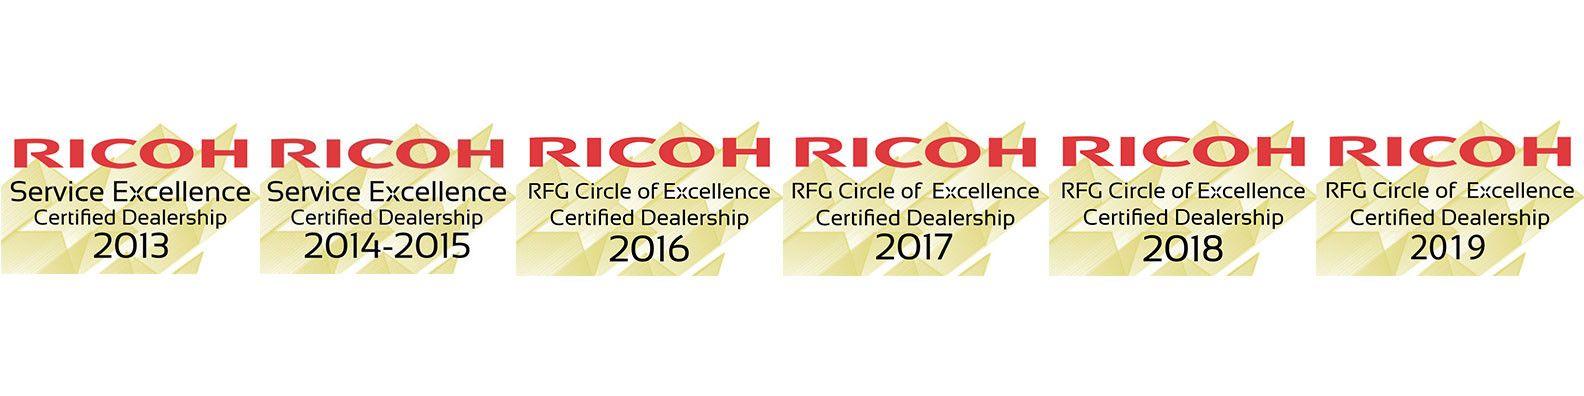 Ricoh Service Excellence Logo - Woodhull LLC | LinkedIn